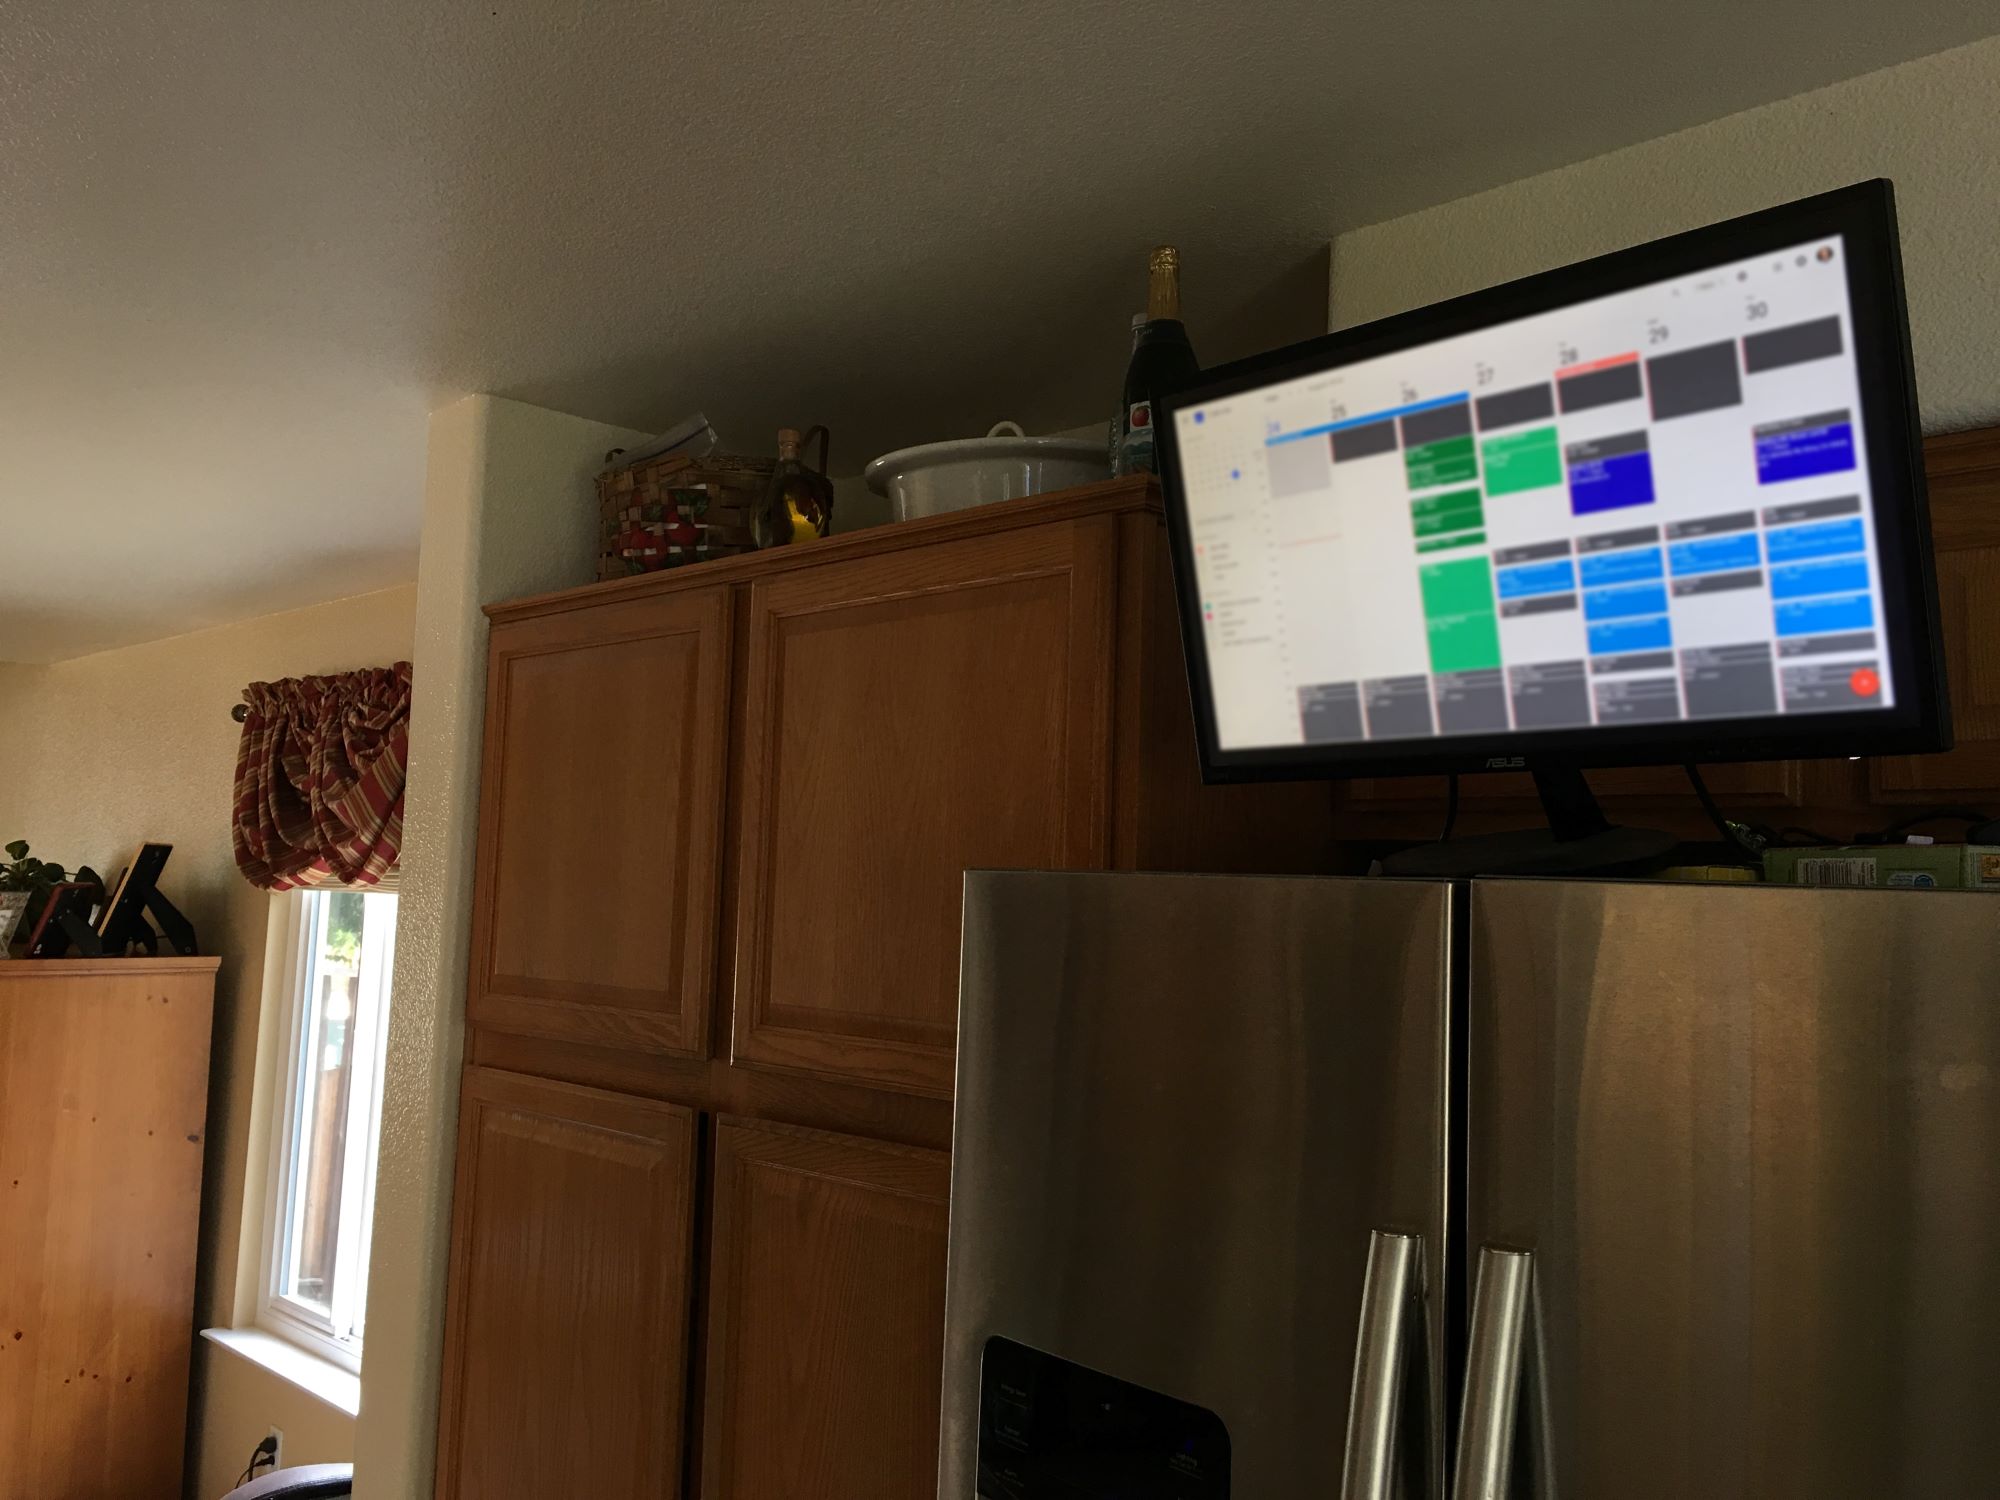 How To Display Google Calendar On Smart TV Robots net